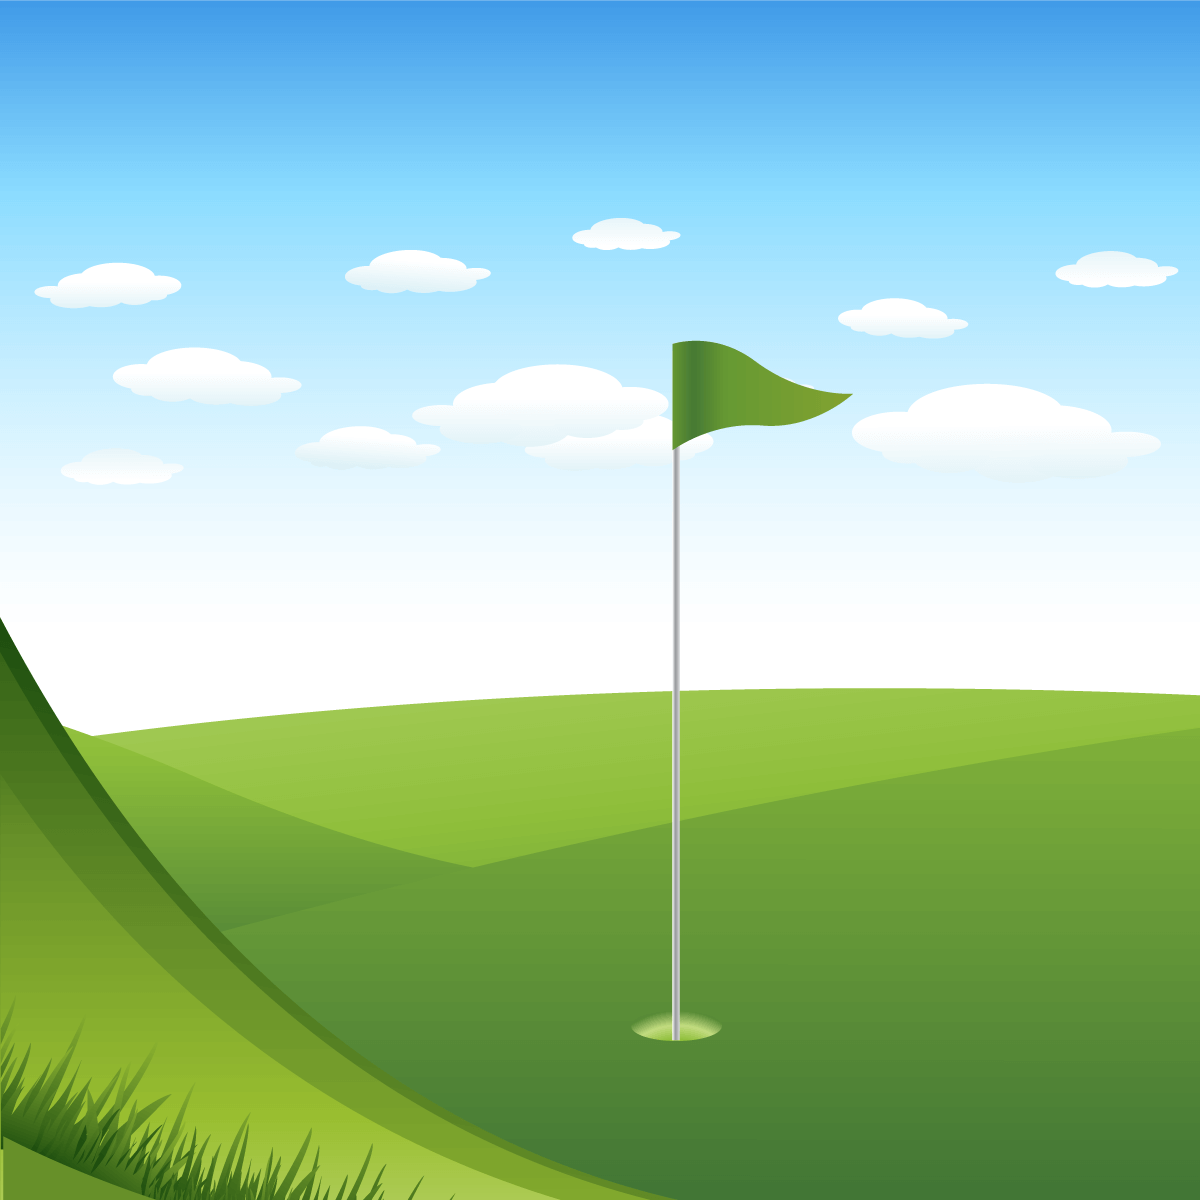 illustration of a golf hole